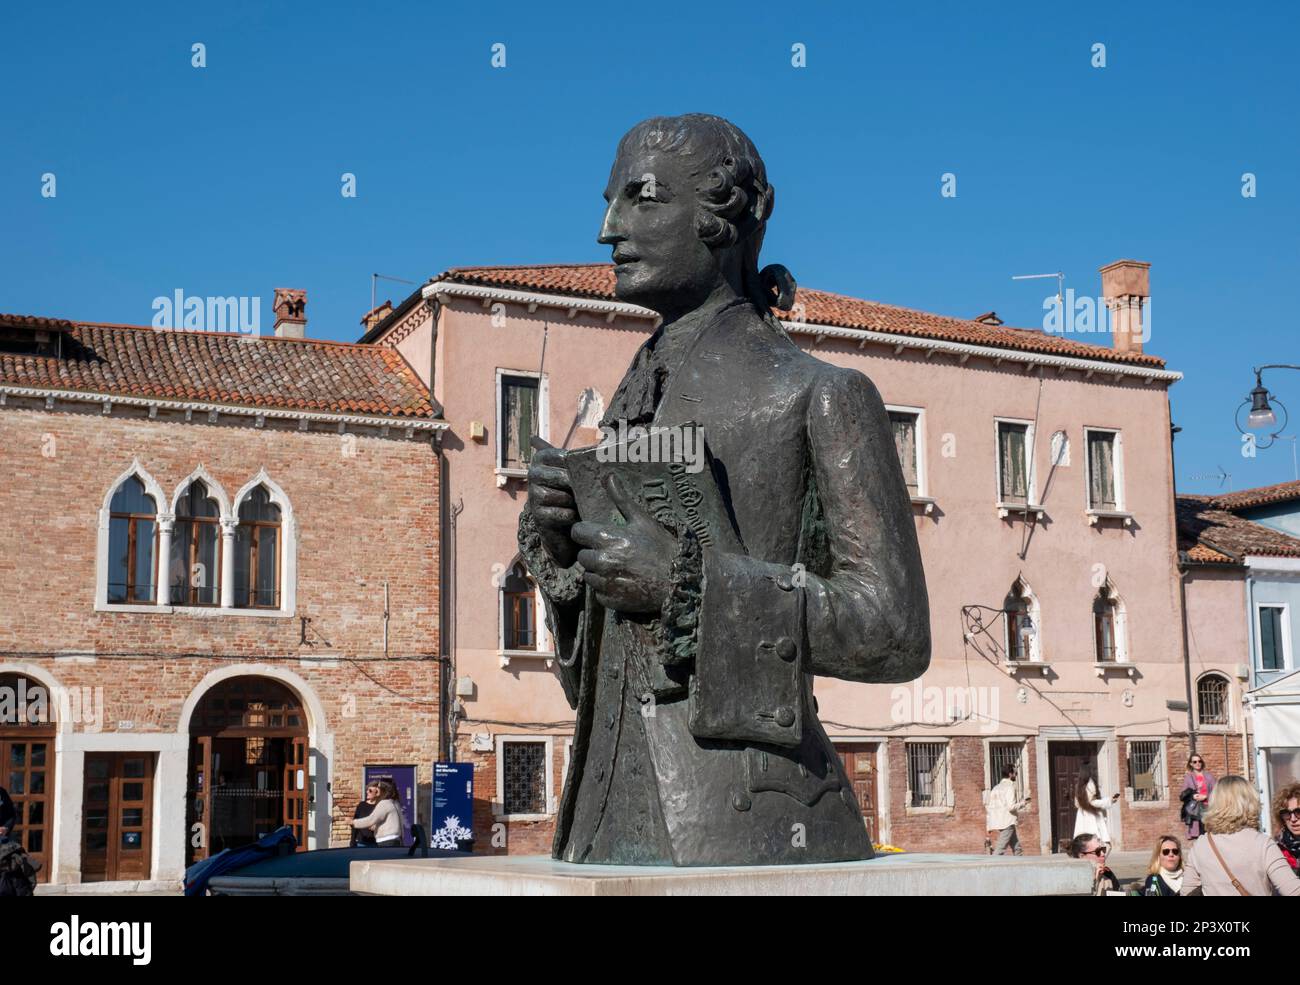 Statue des italienischen Komponisten Baldassare Galuppi aus dem 18. Jahrhundert, Burano Venedig, Venetien, Italien Stockfoto